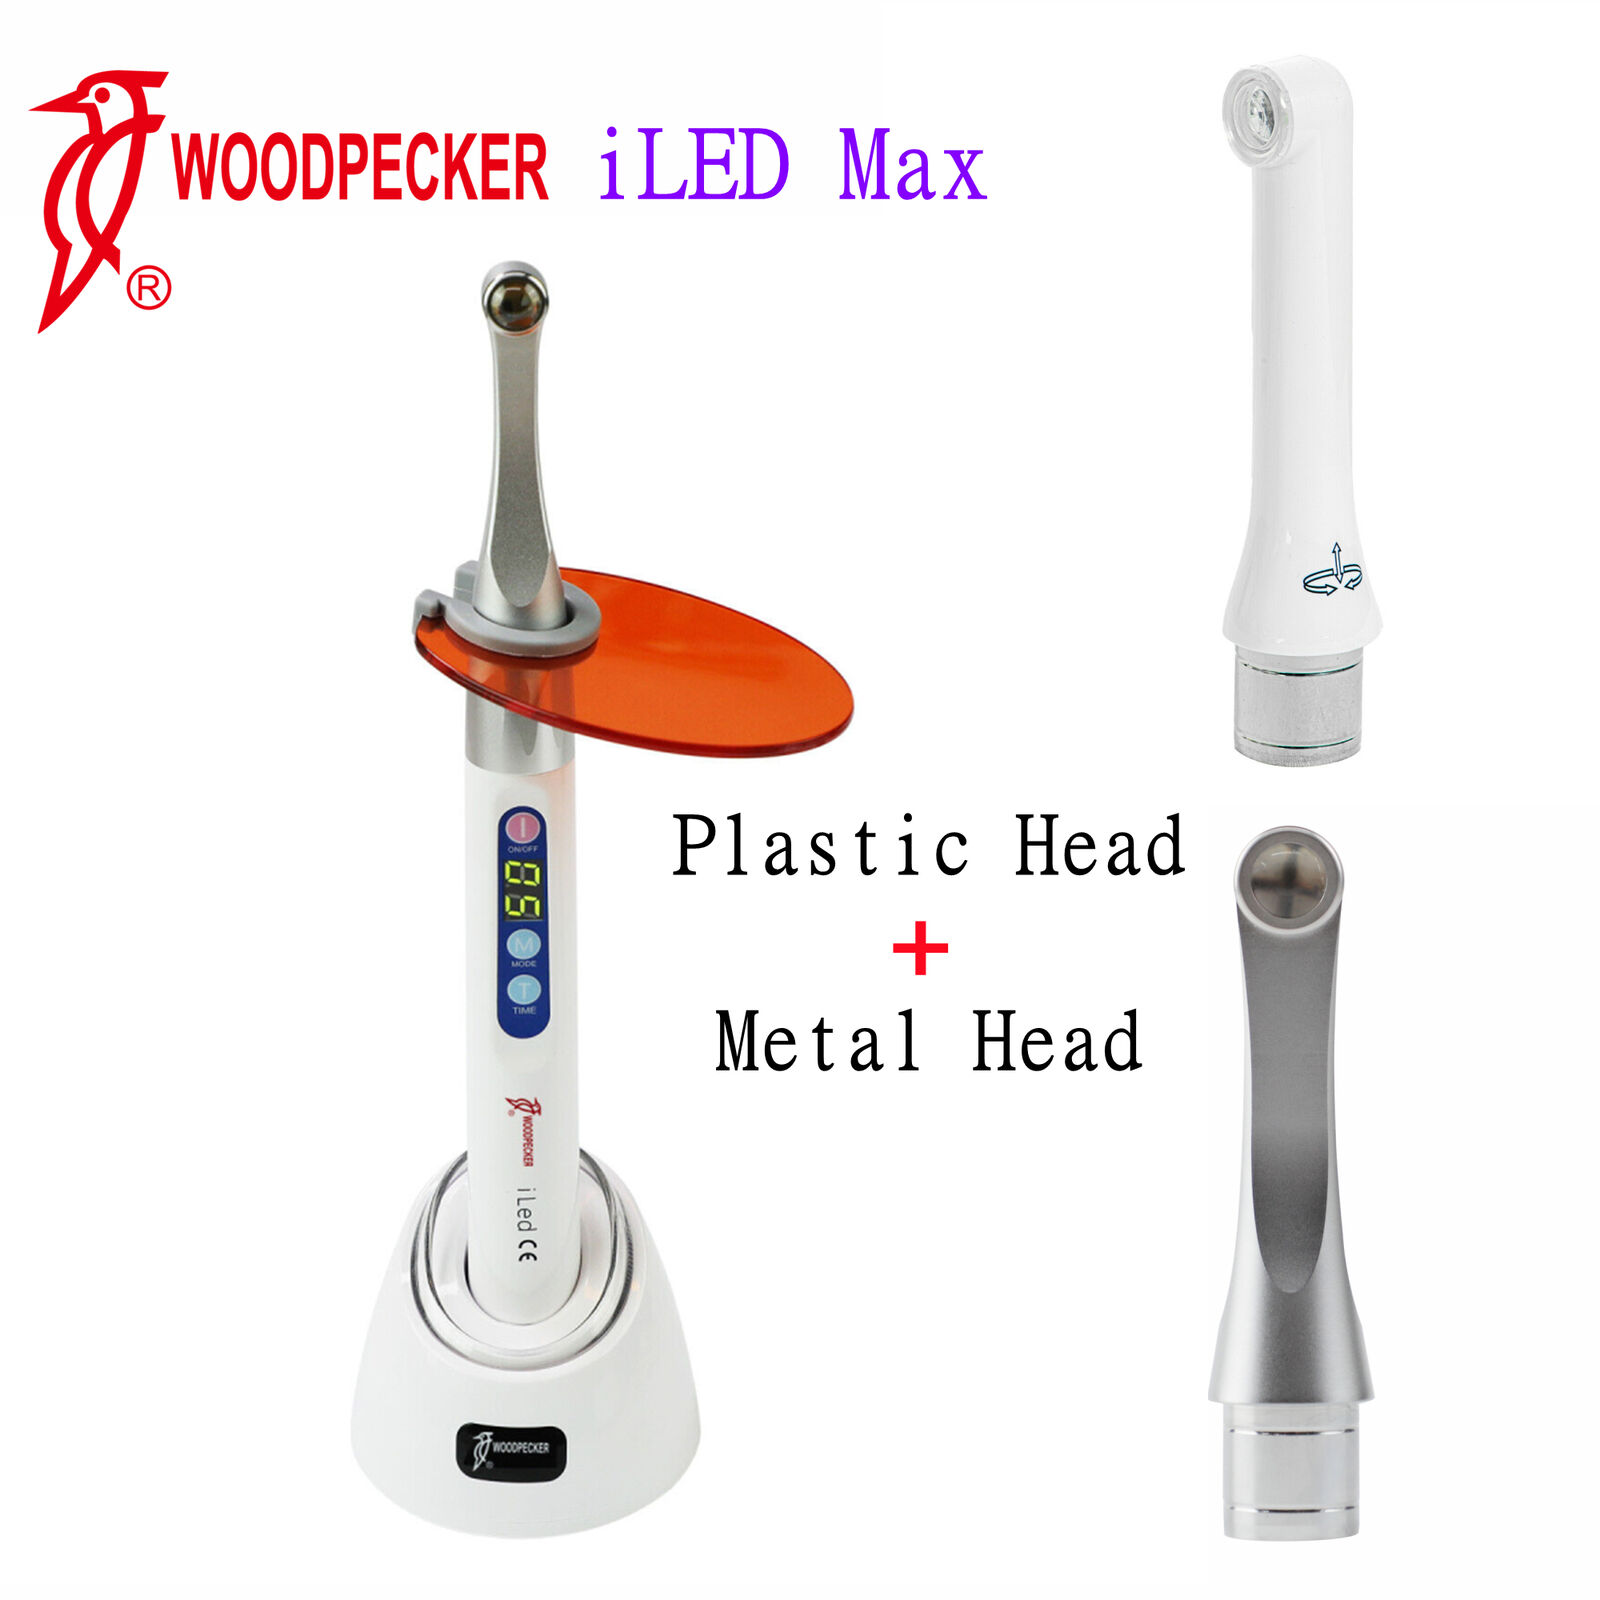 100% Woodpecker DTE Dental iLED Max Curing Light Lamp 1 Year Warranty 2600mw/c㎡